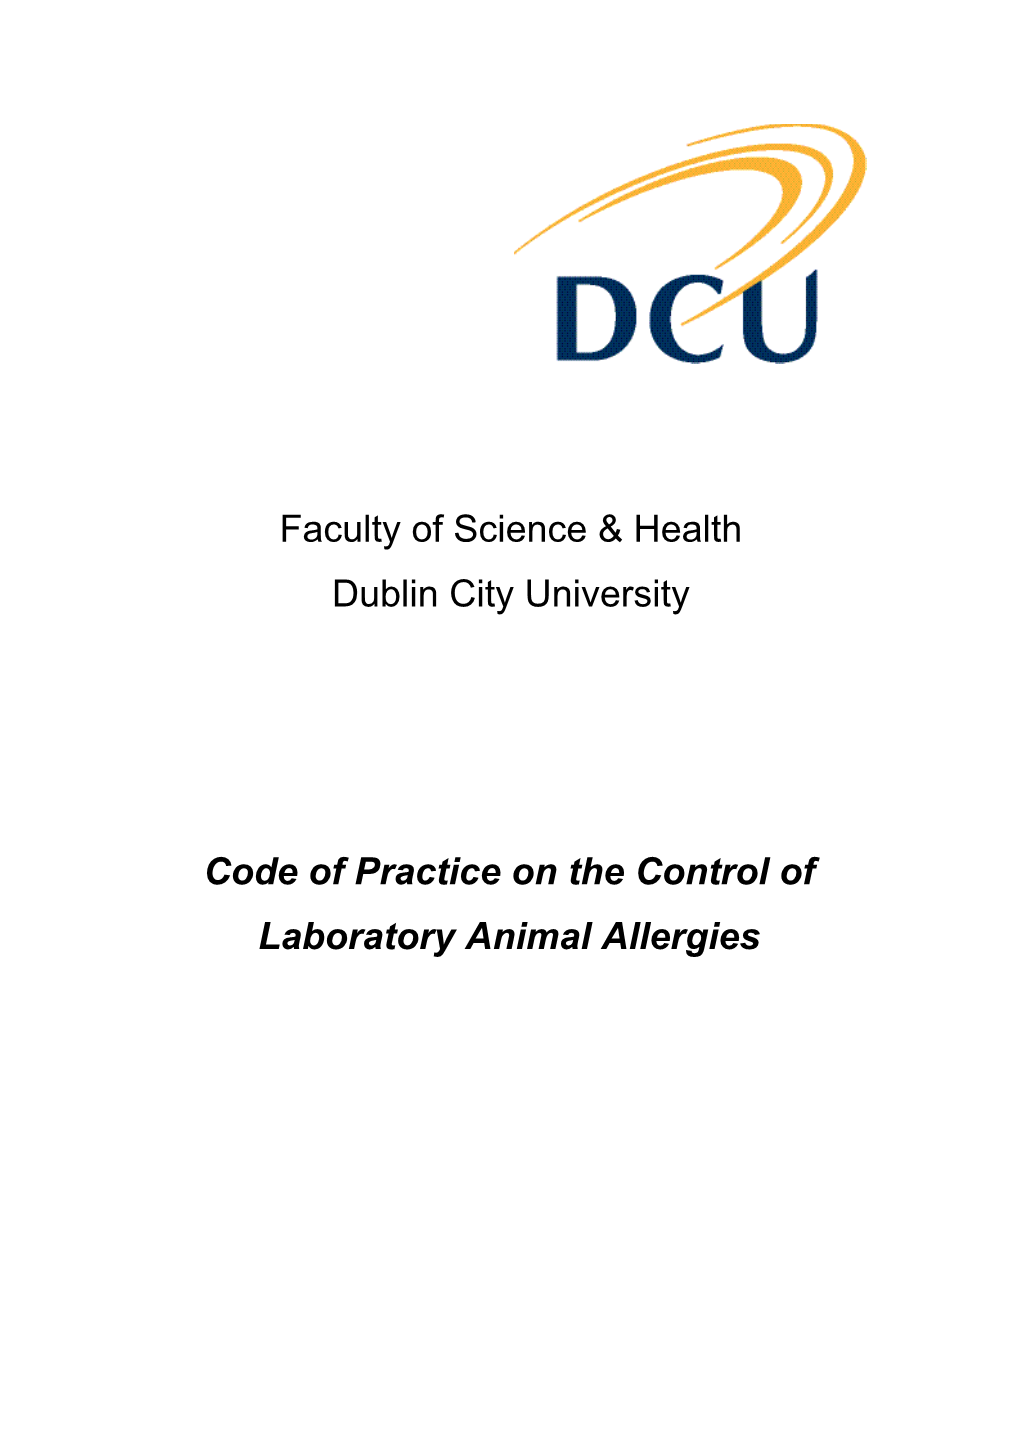 Laboratory Animal Allergy